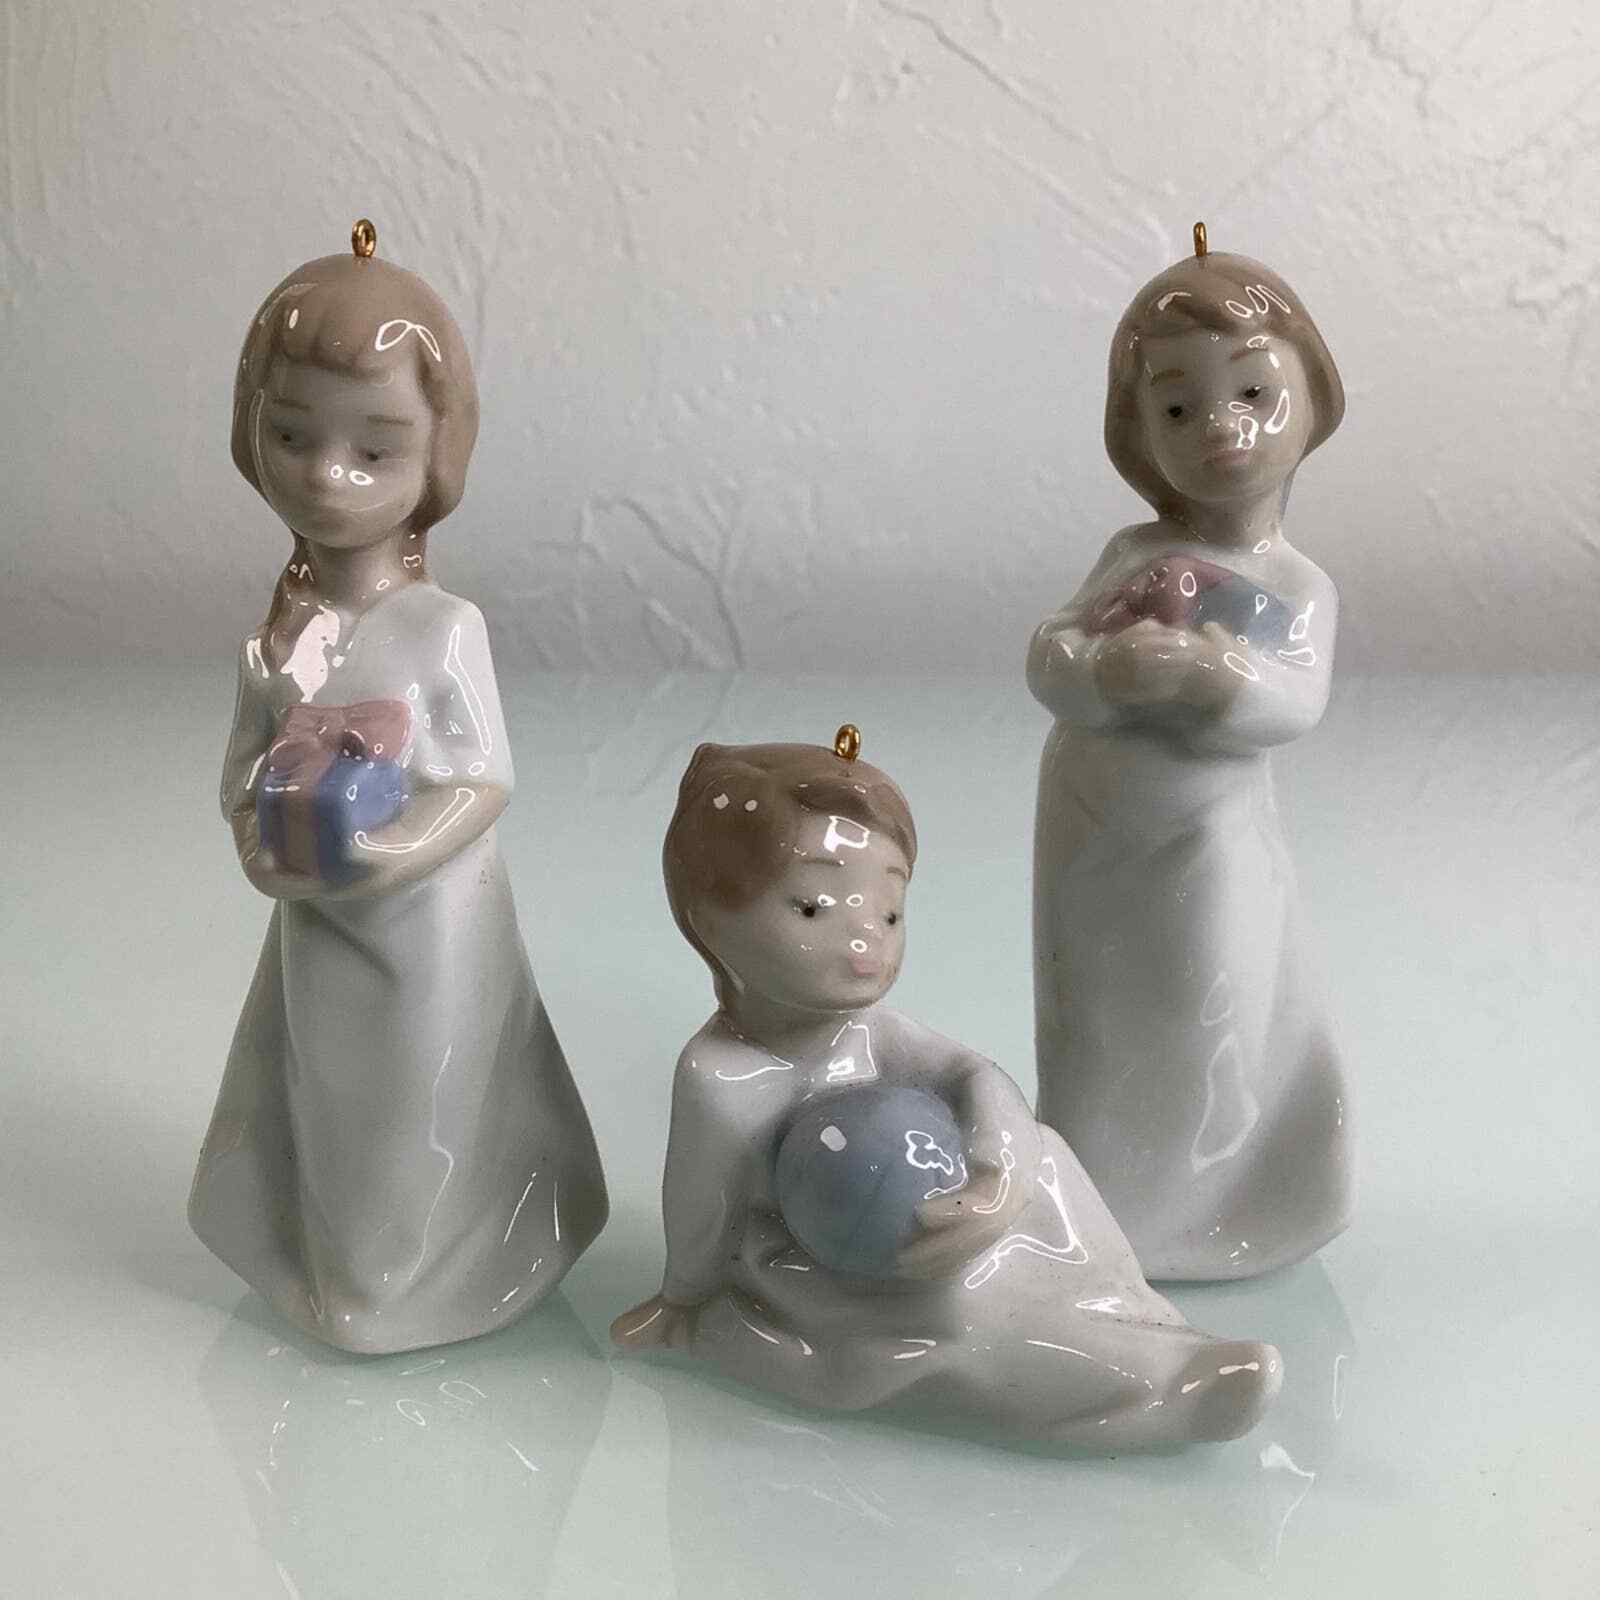 Vintage Lladro Mini Ornaments Christmas Morning #5940 set of 3 figurines EUC